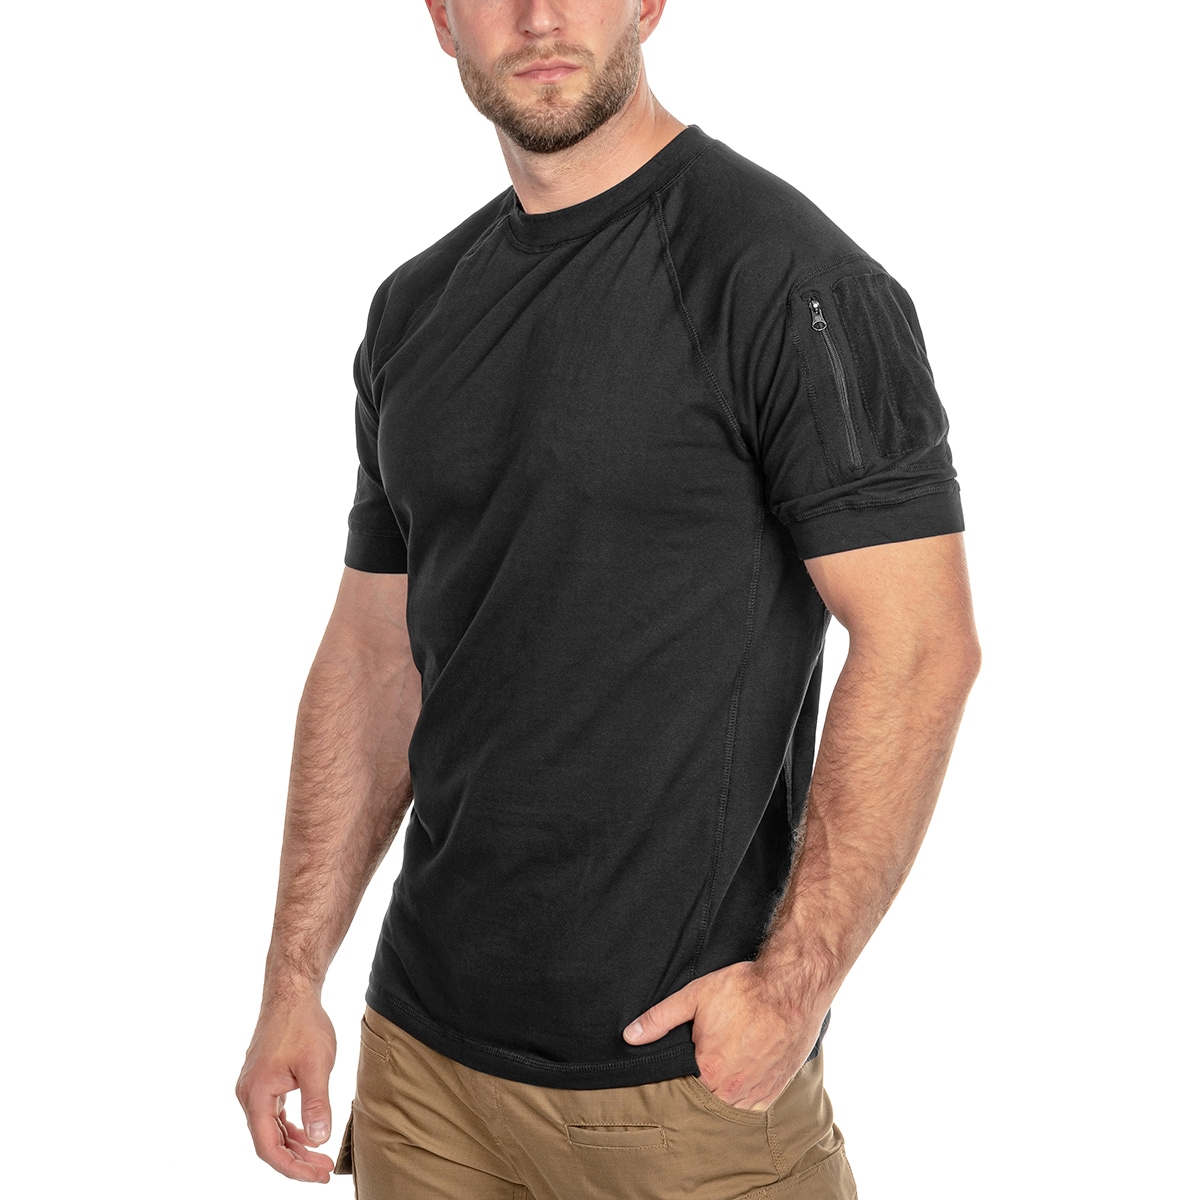 Koszulka T-shirt Texar Duty Black